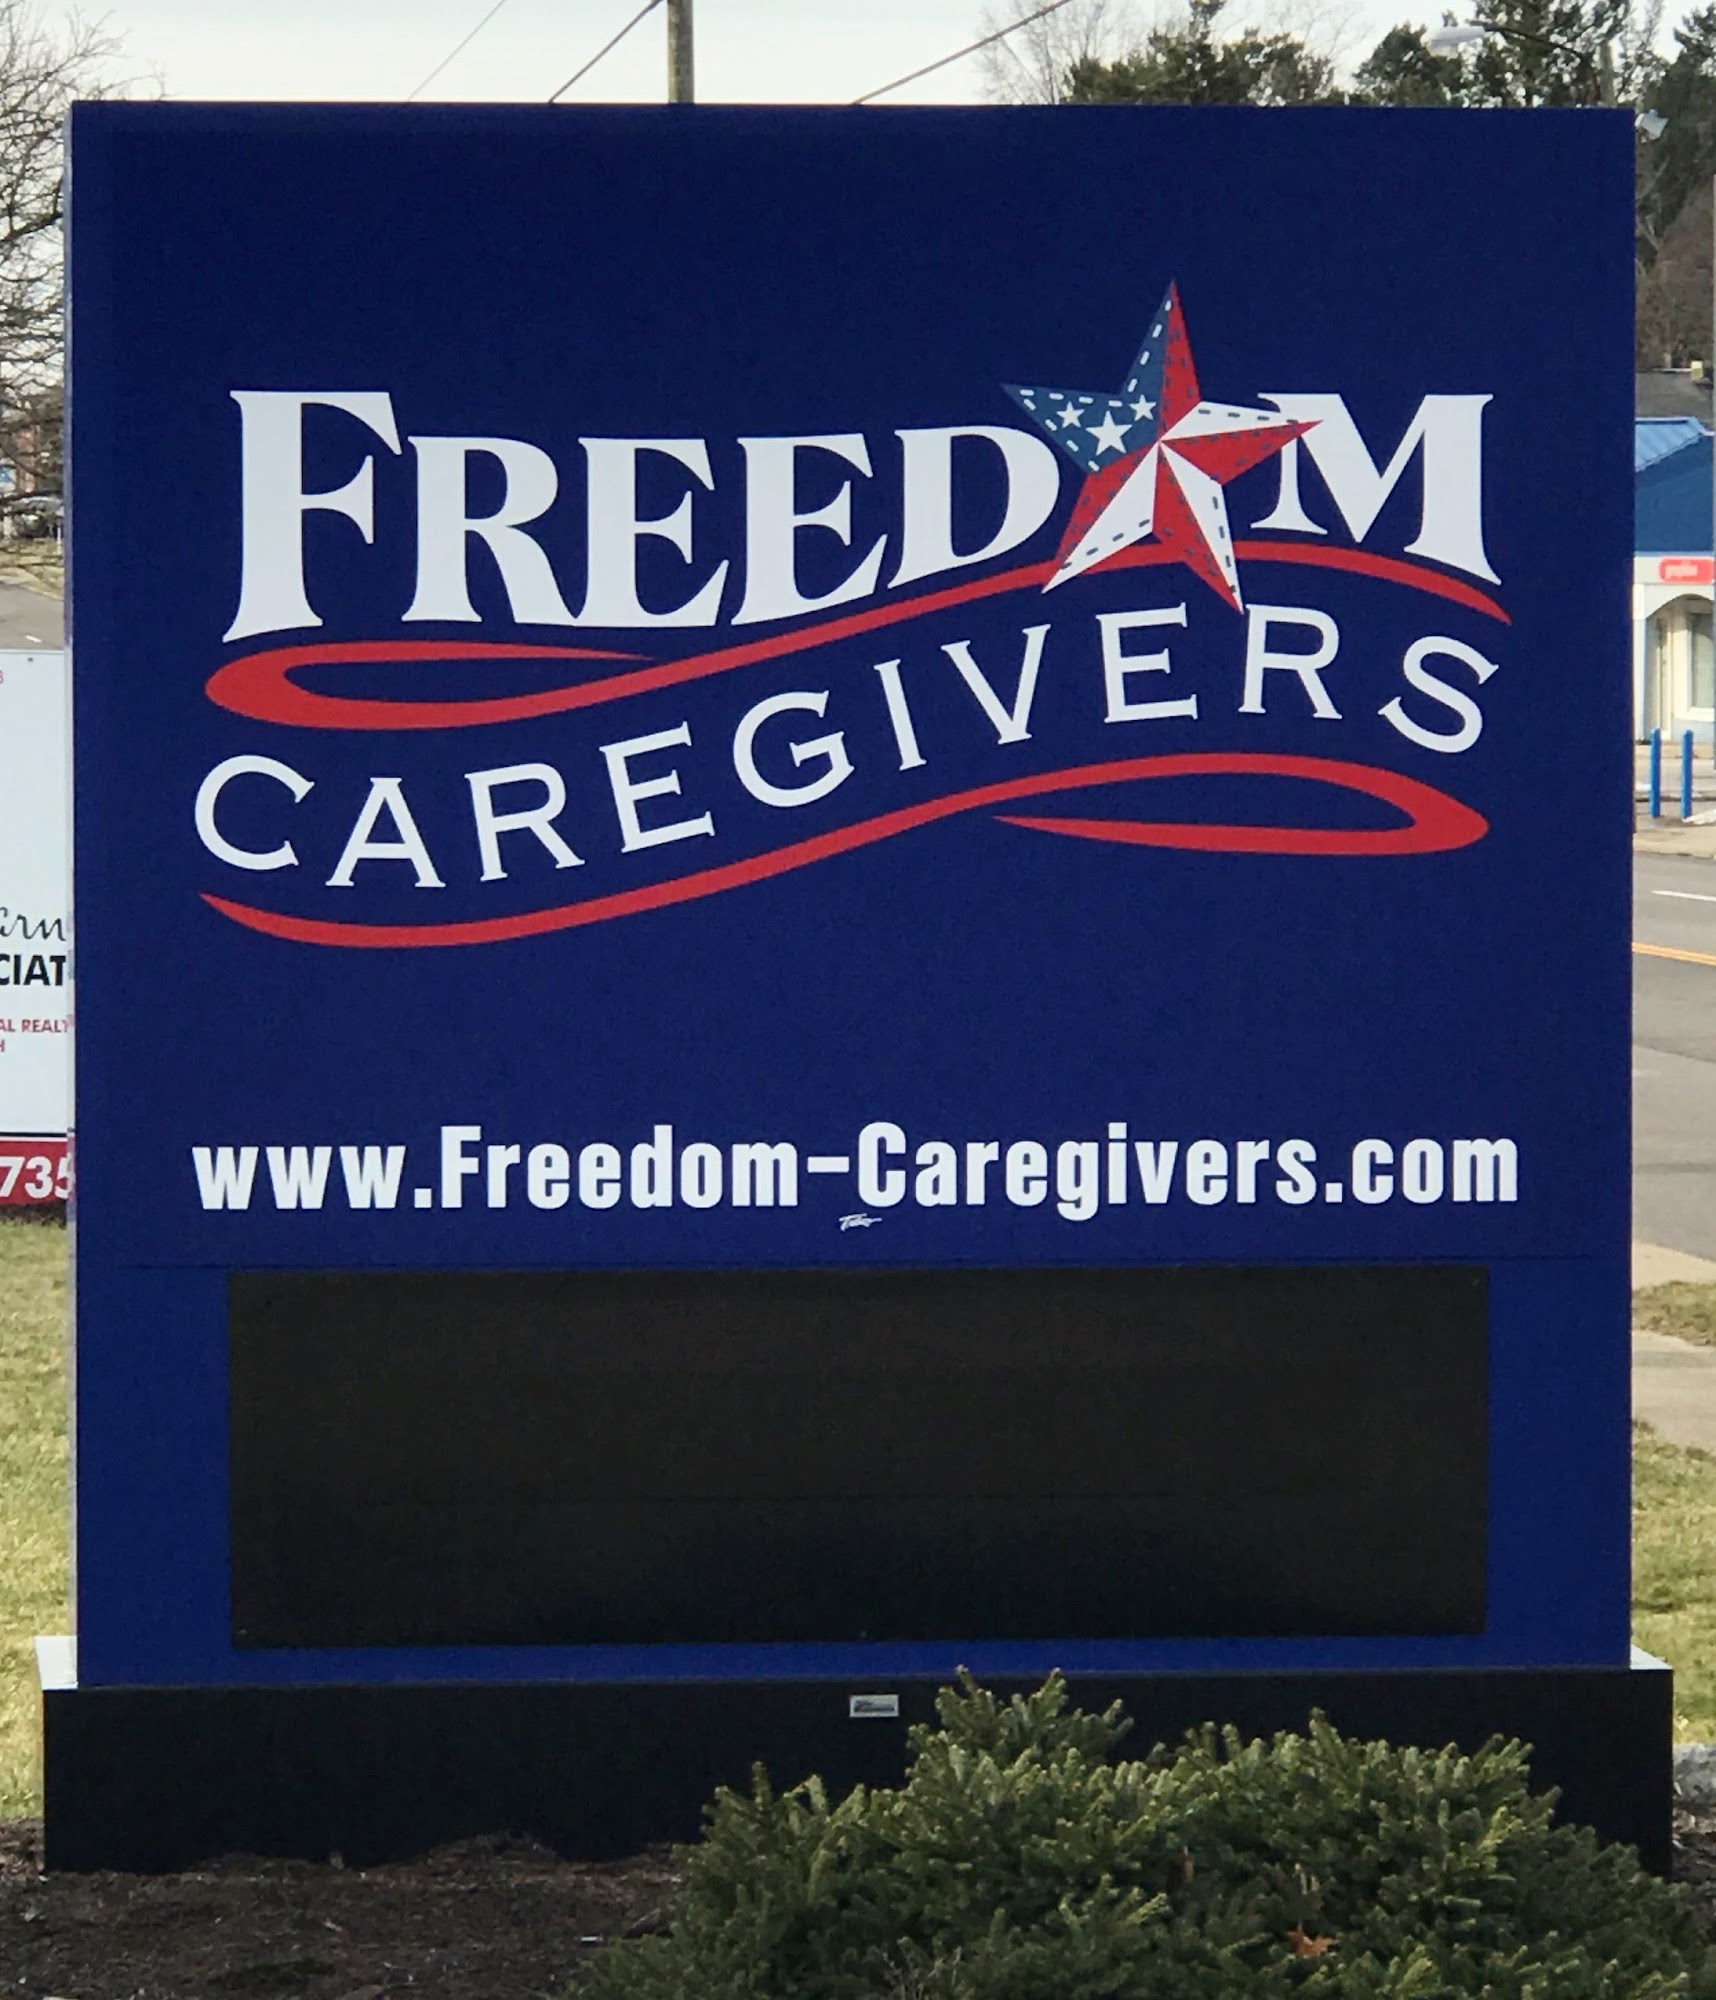 Freedom Caregivers